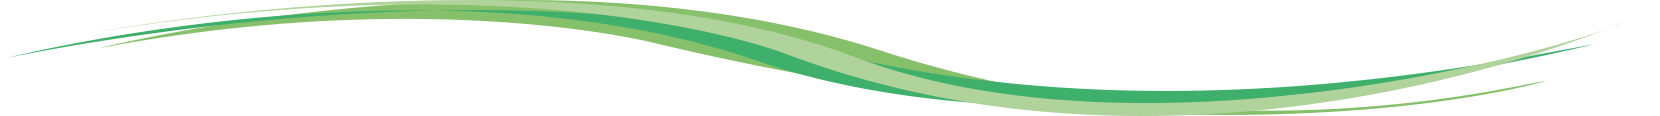 ligne vagues verte